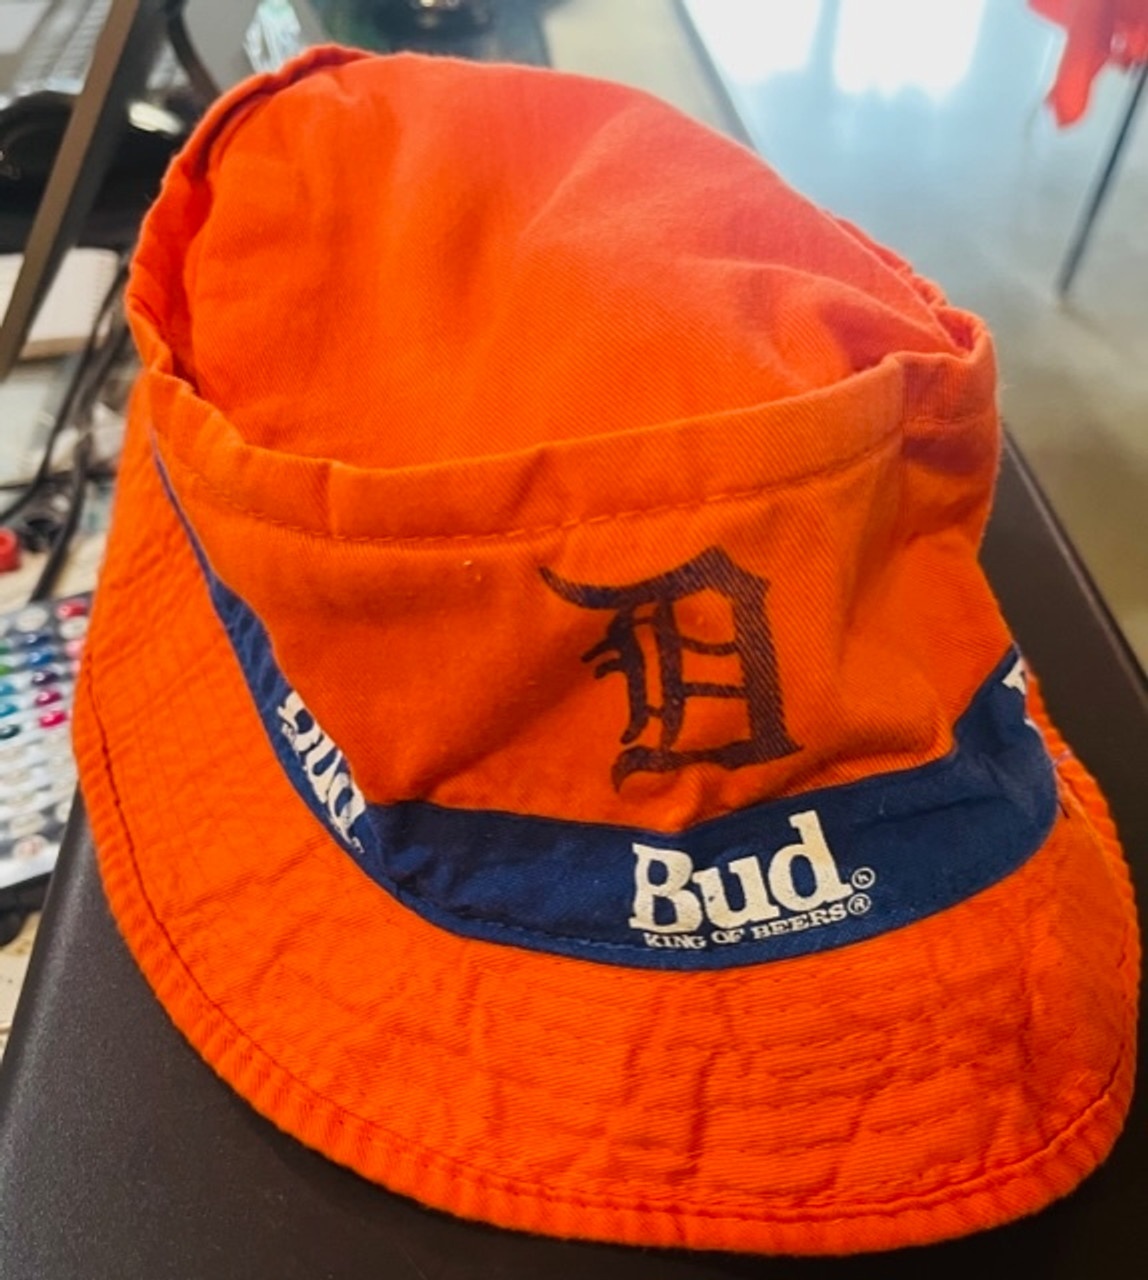 Vintage Detroit Tigers Sports Specialties Snapback Baseball Hat